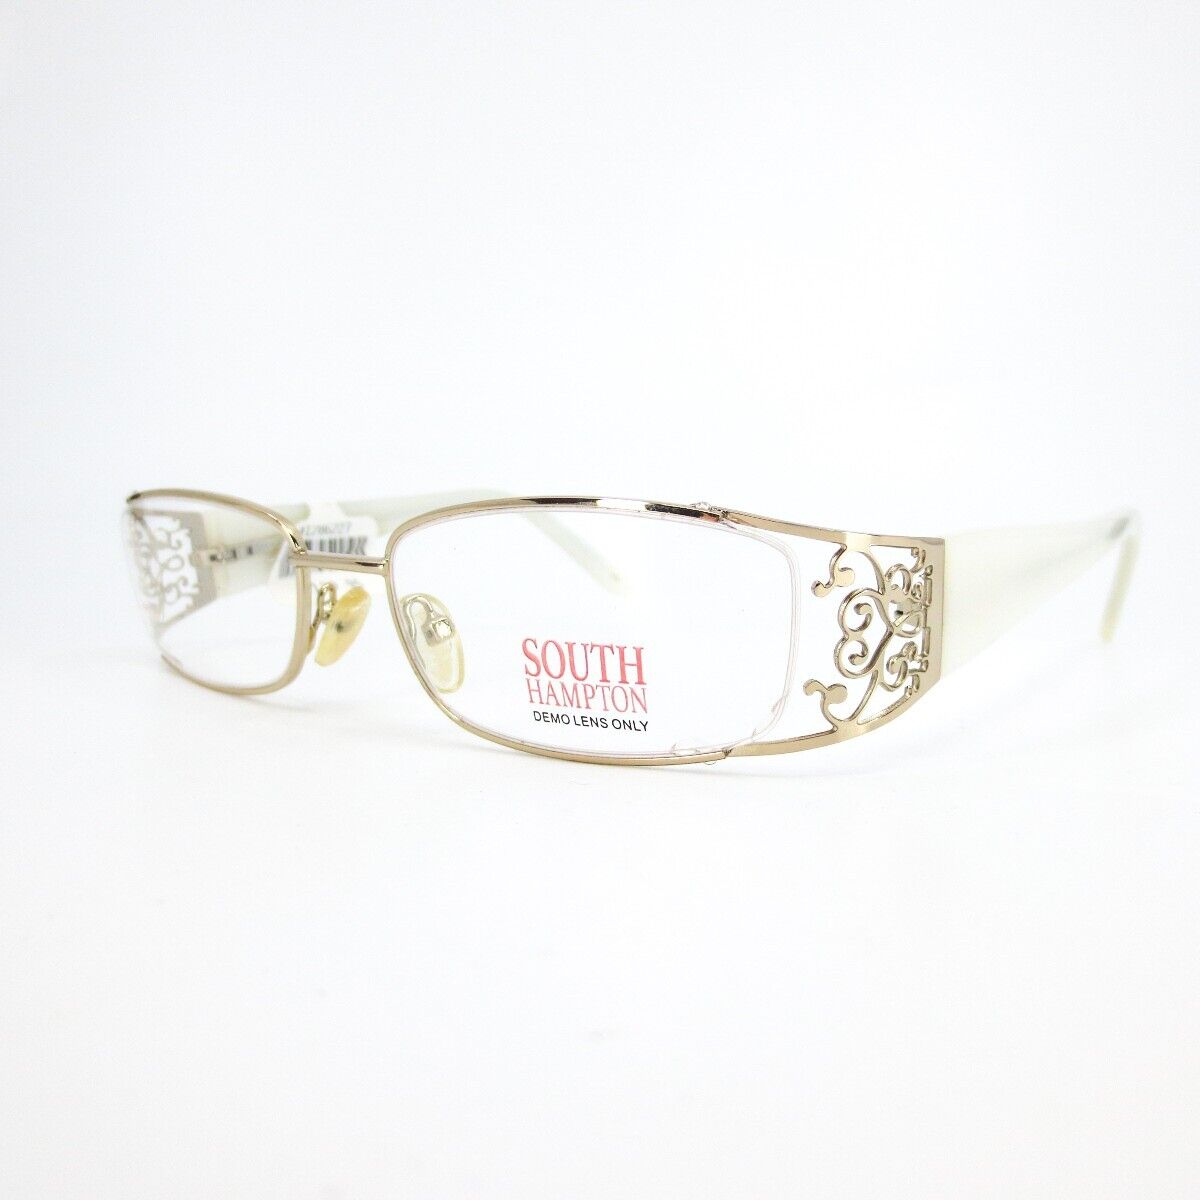 South Hampton SH806 YG Eyeglasses Frames white gold Rectangular 52-18-130